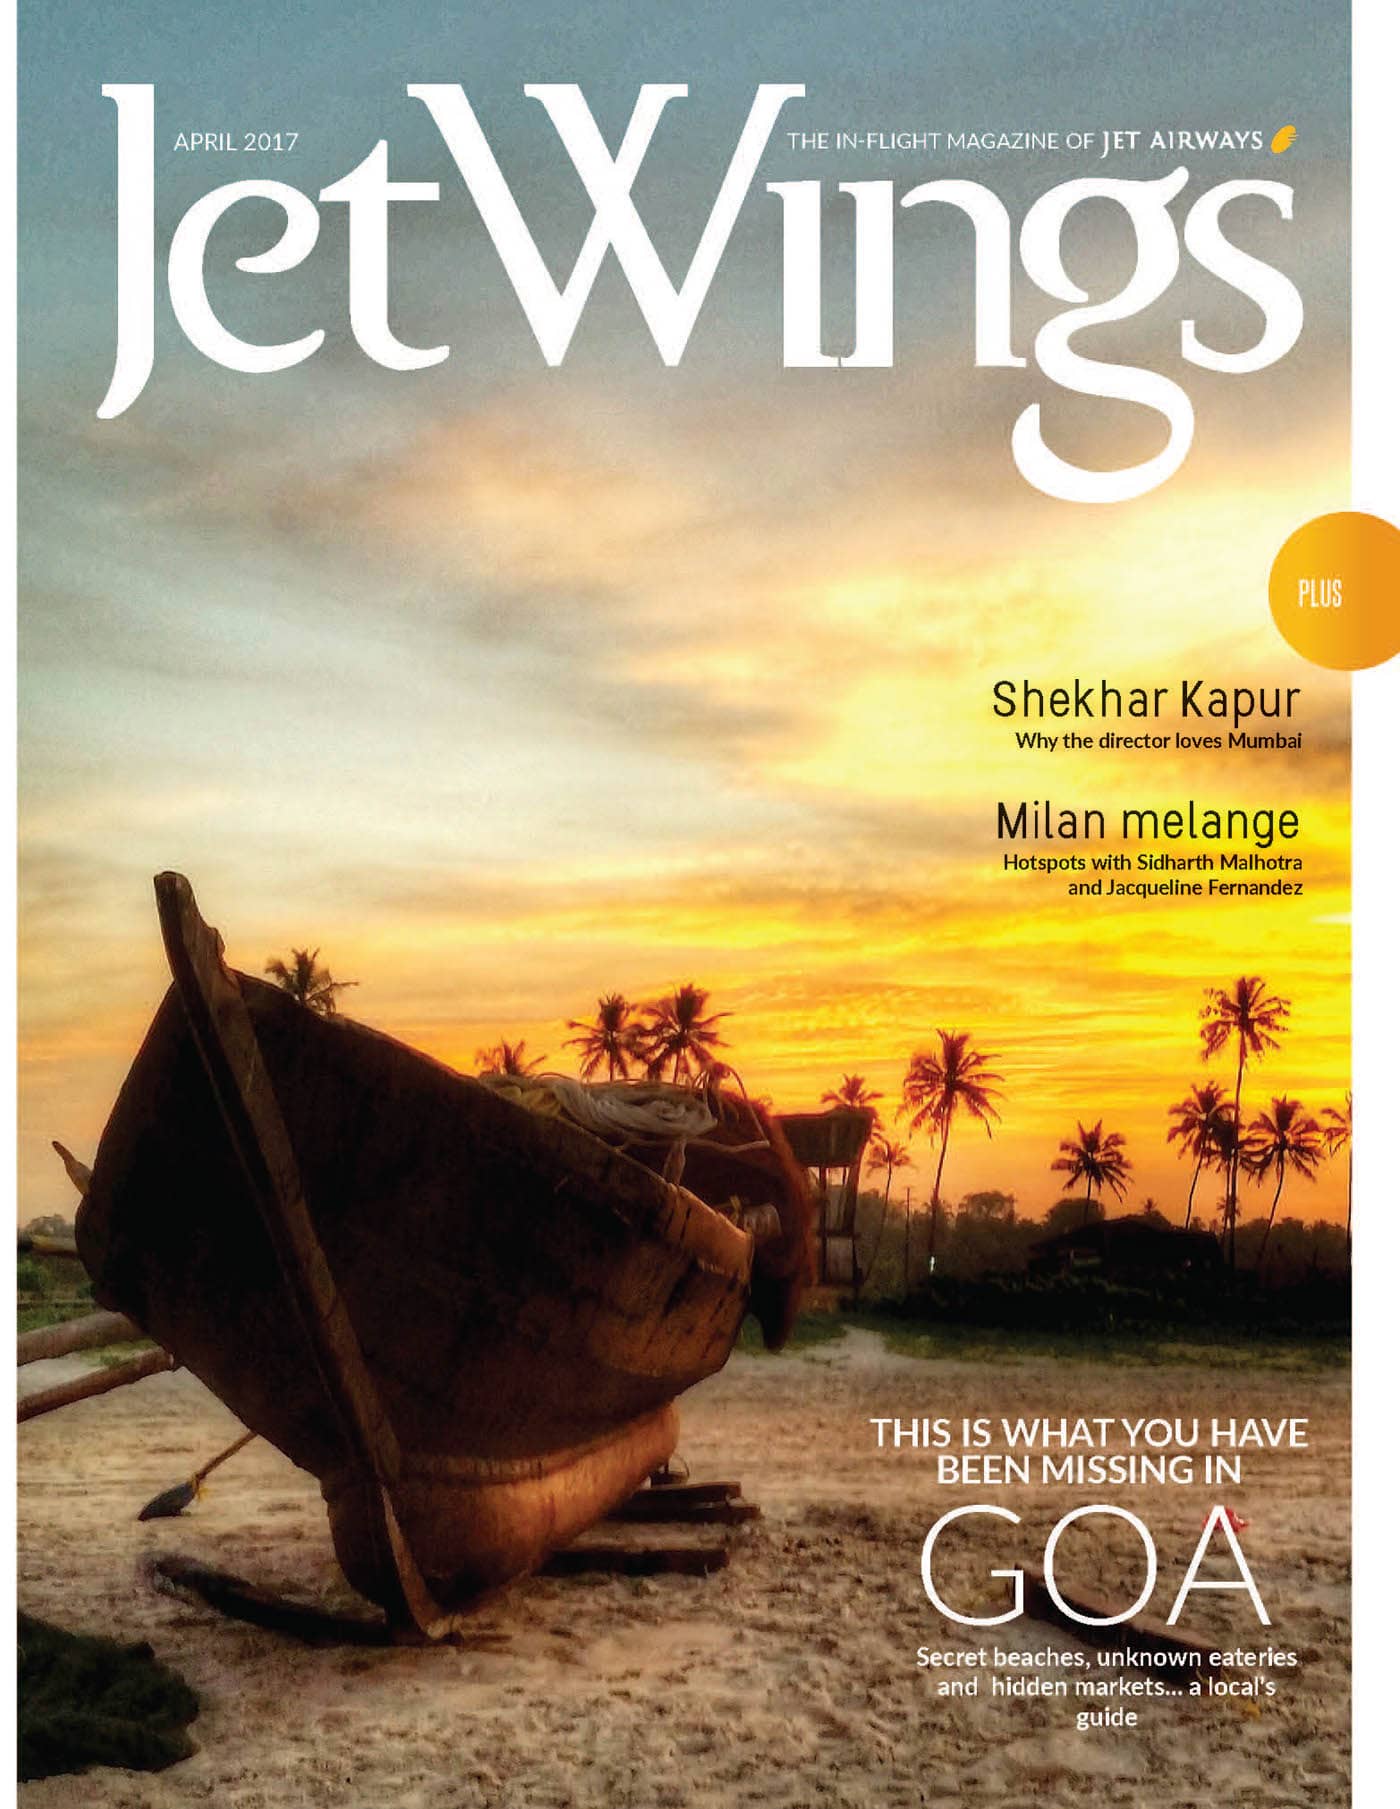 jetwings magazine